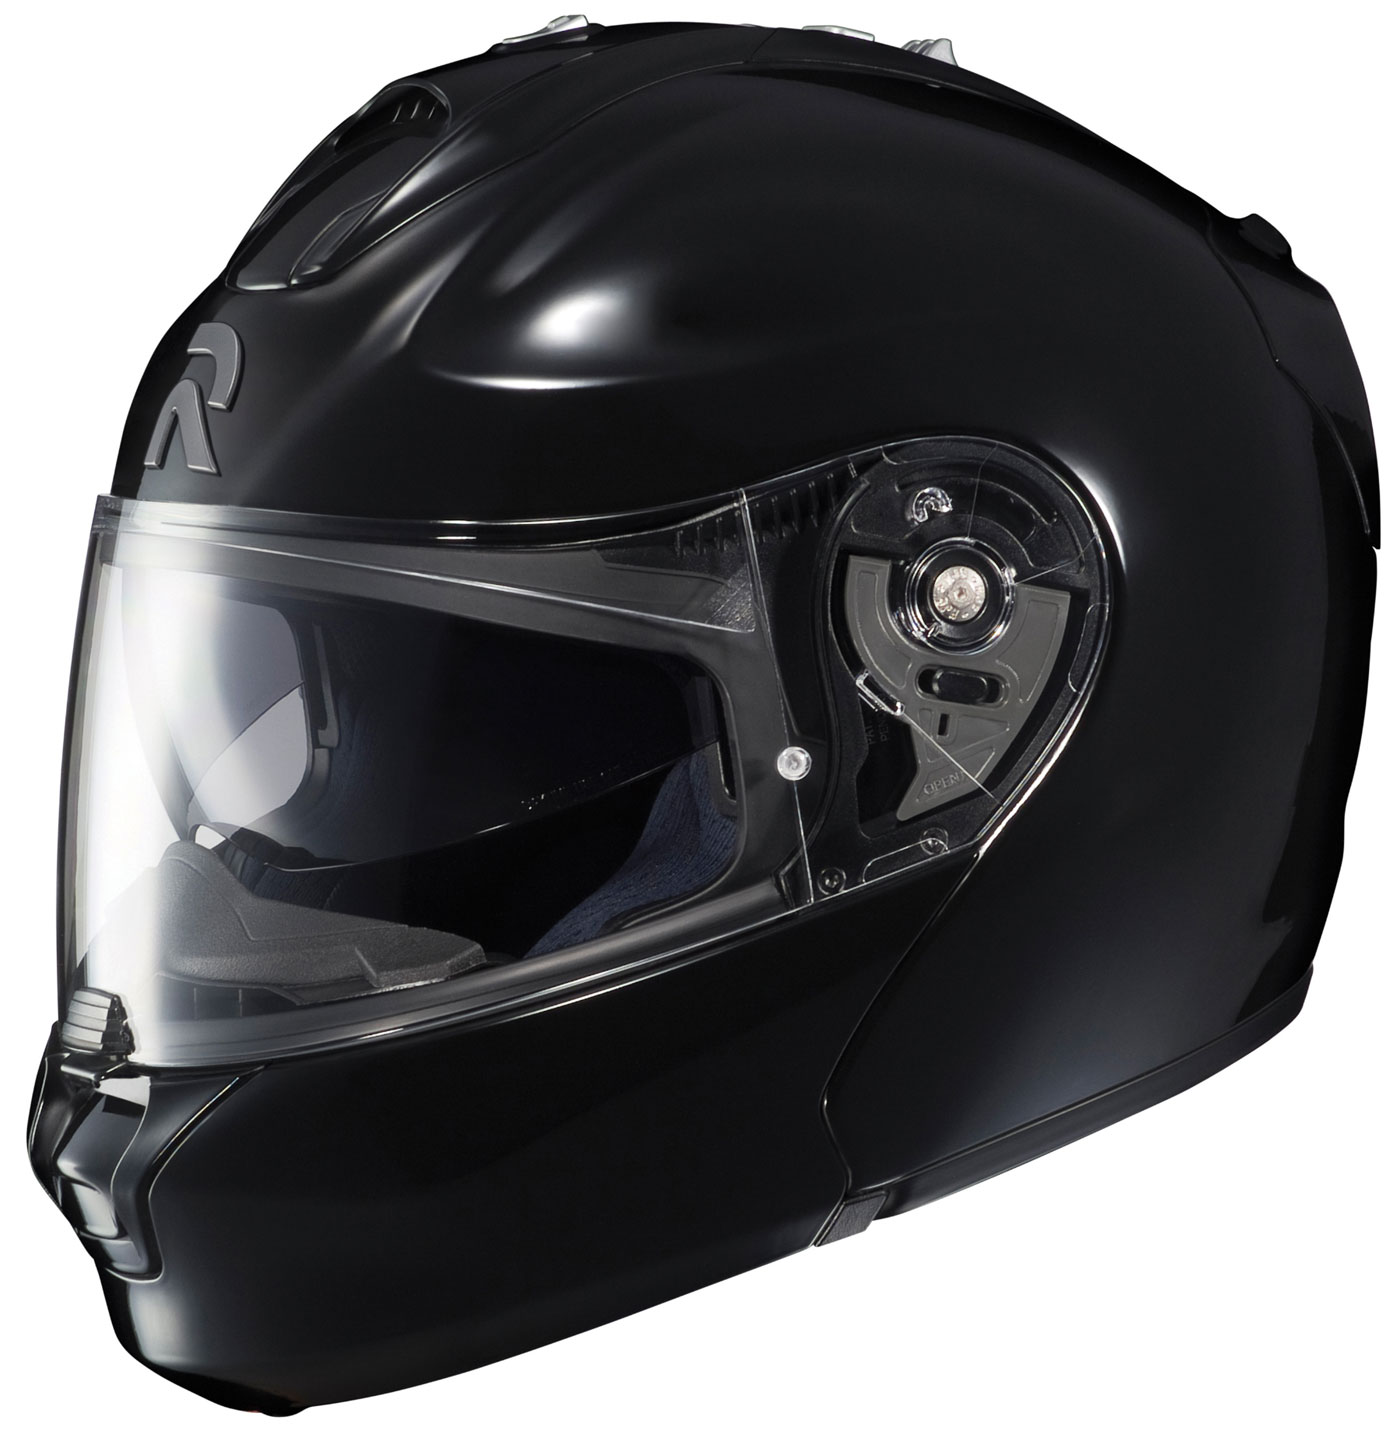 Remarkable Gallery Of motorcycle helmet machining Concept